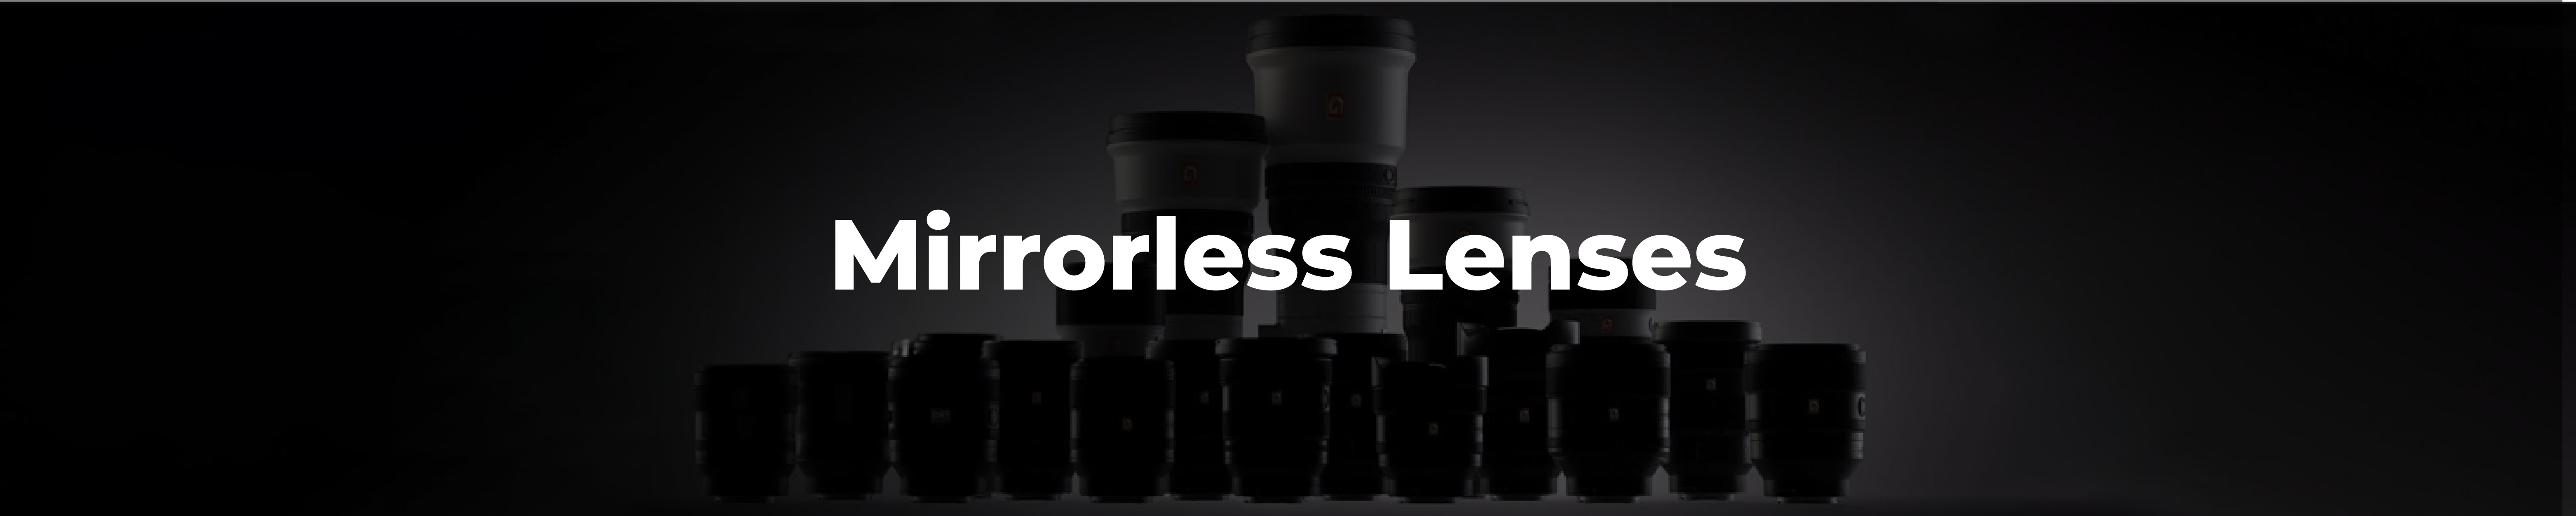 Mirrorless Lenses